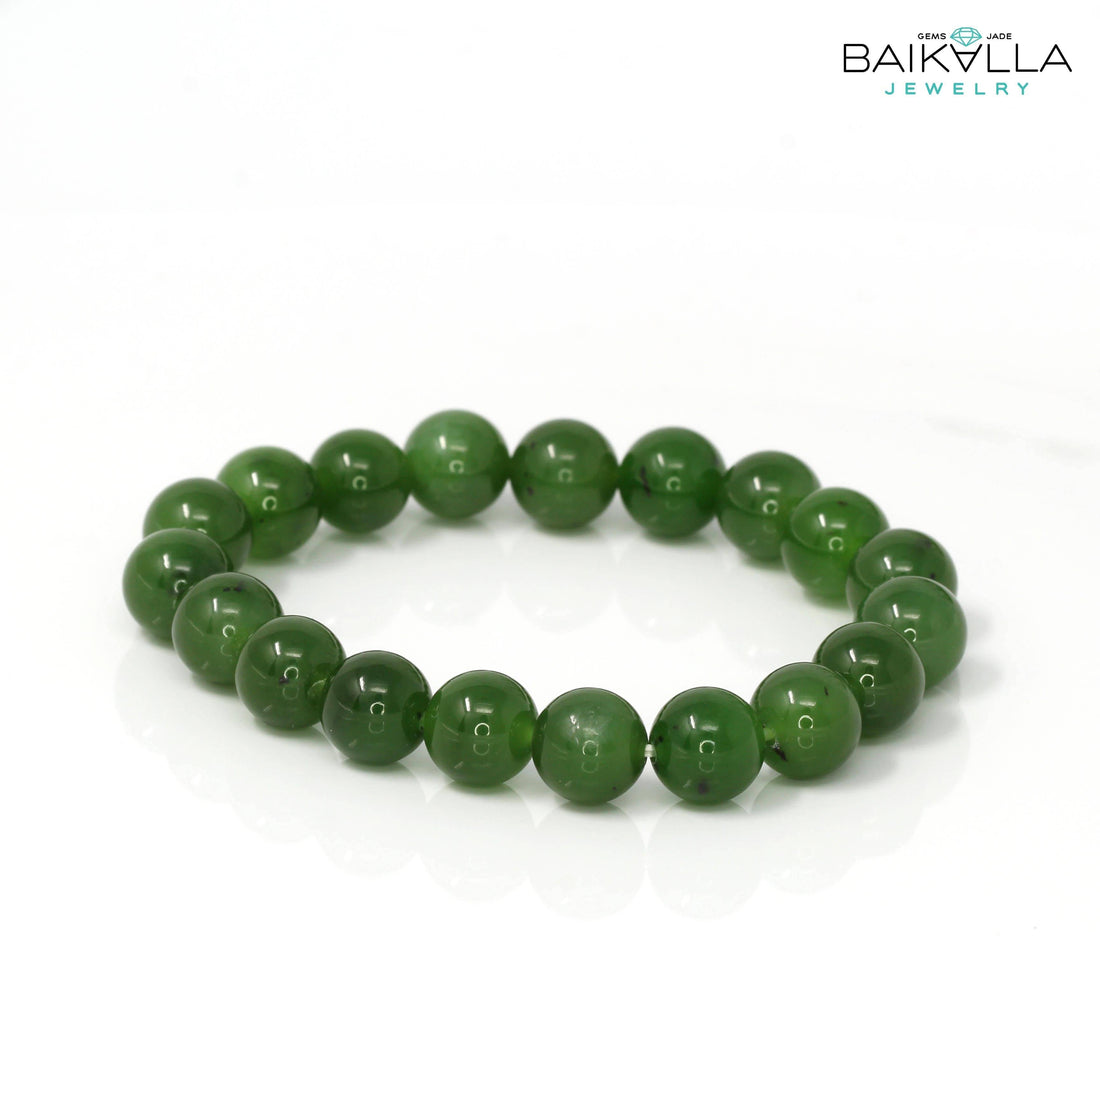 Baikalla Jewelry jade beads bracelet 8 inches Genuine Green Jade Round Beads Bracelet Bangle ( 8 mm )